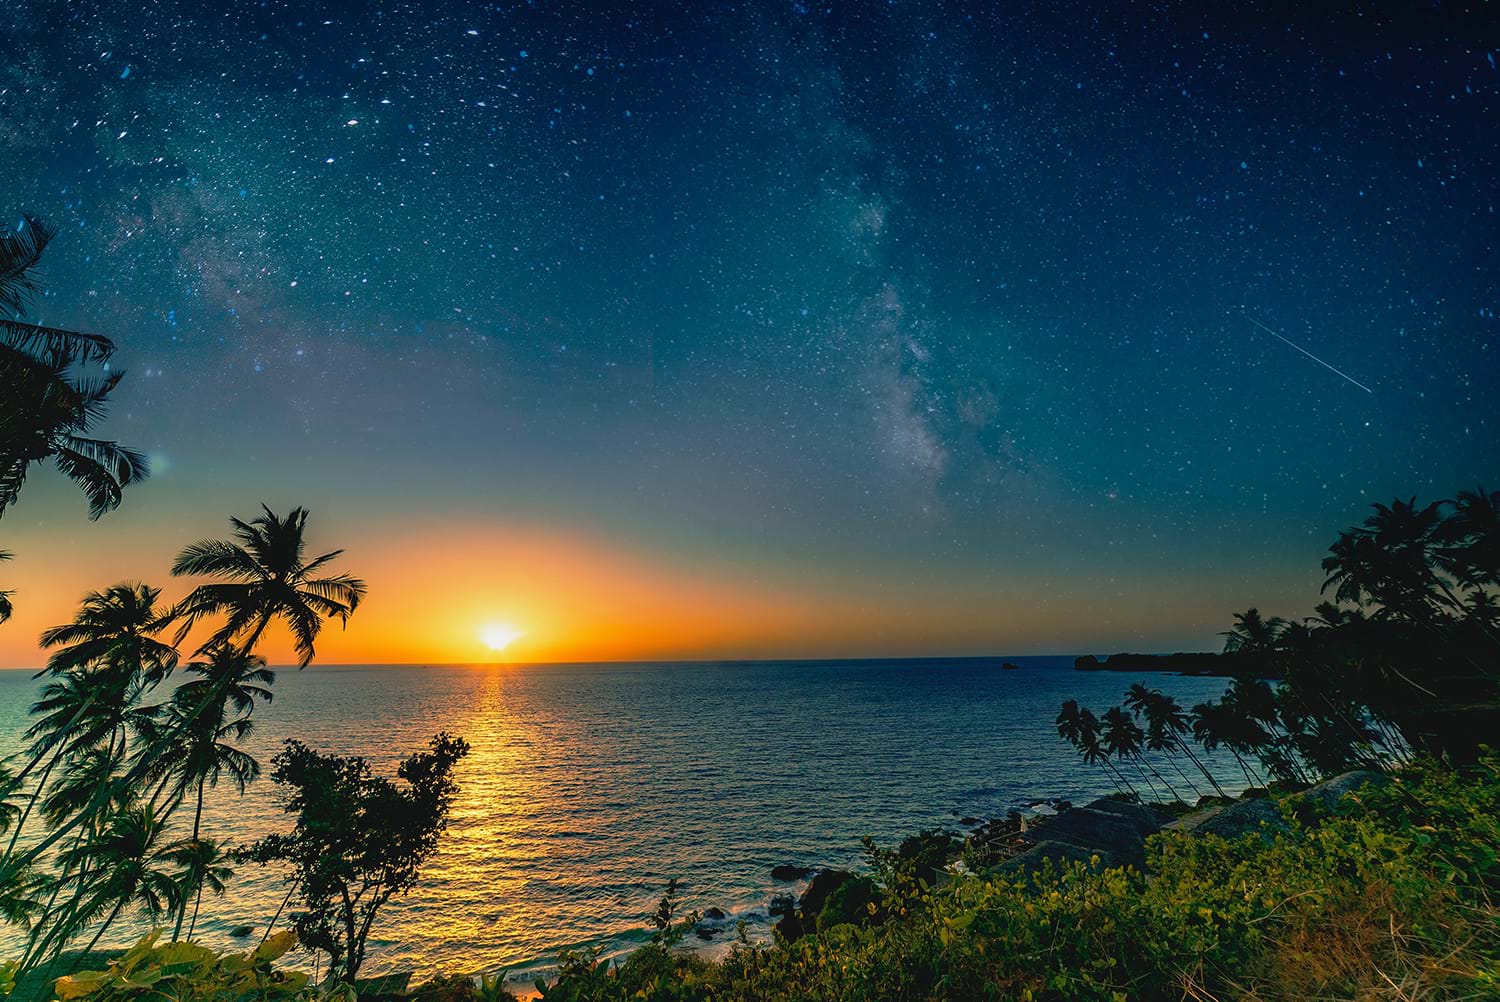 Starry night sky over tropical coast